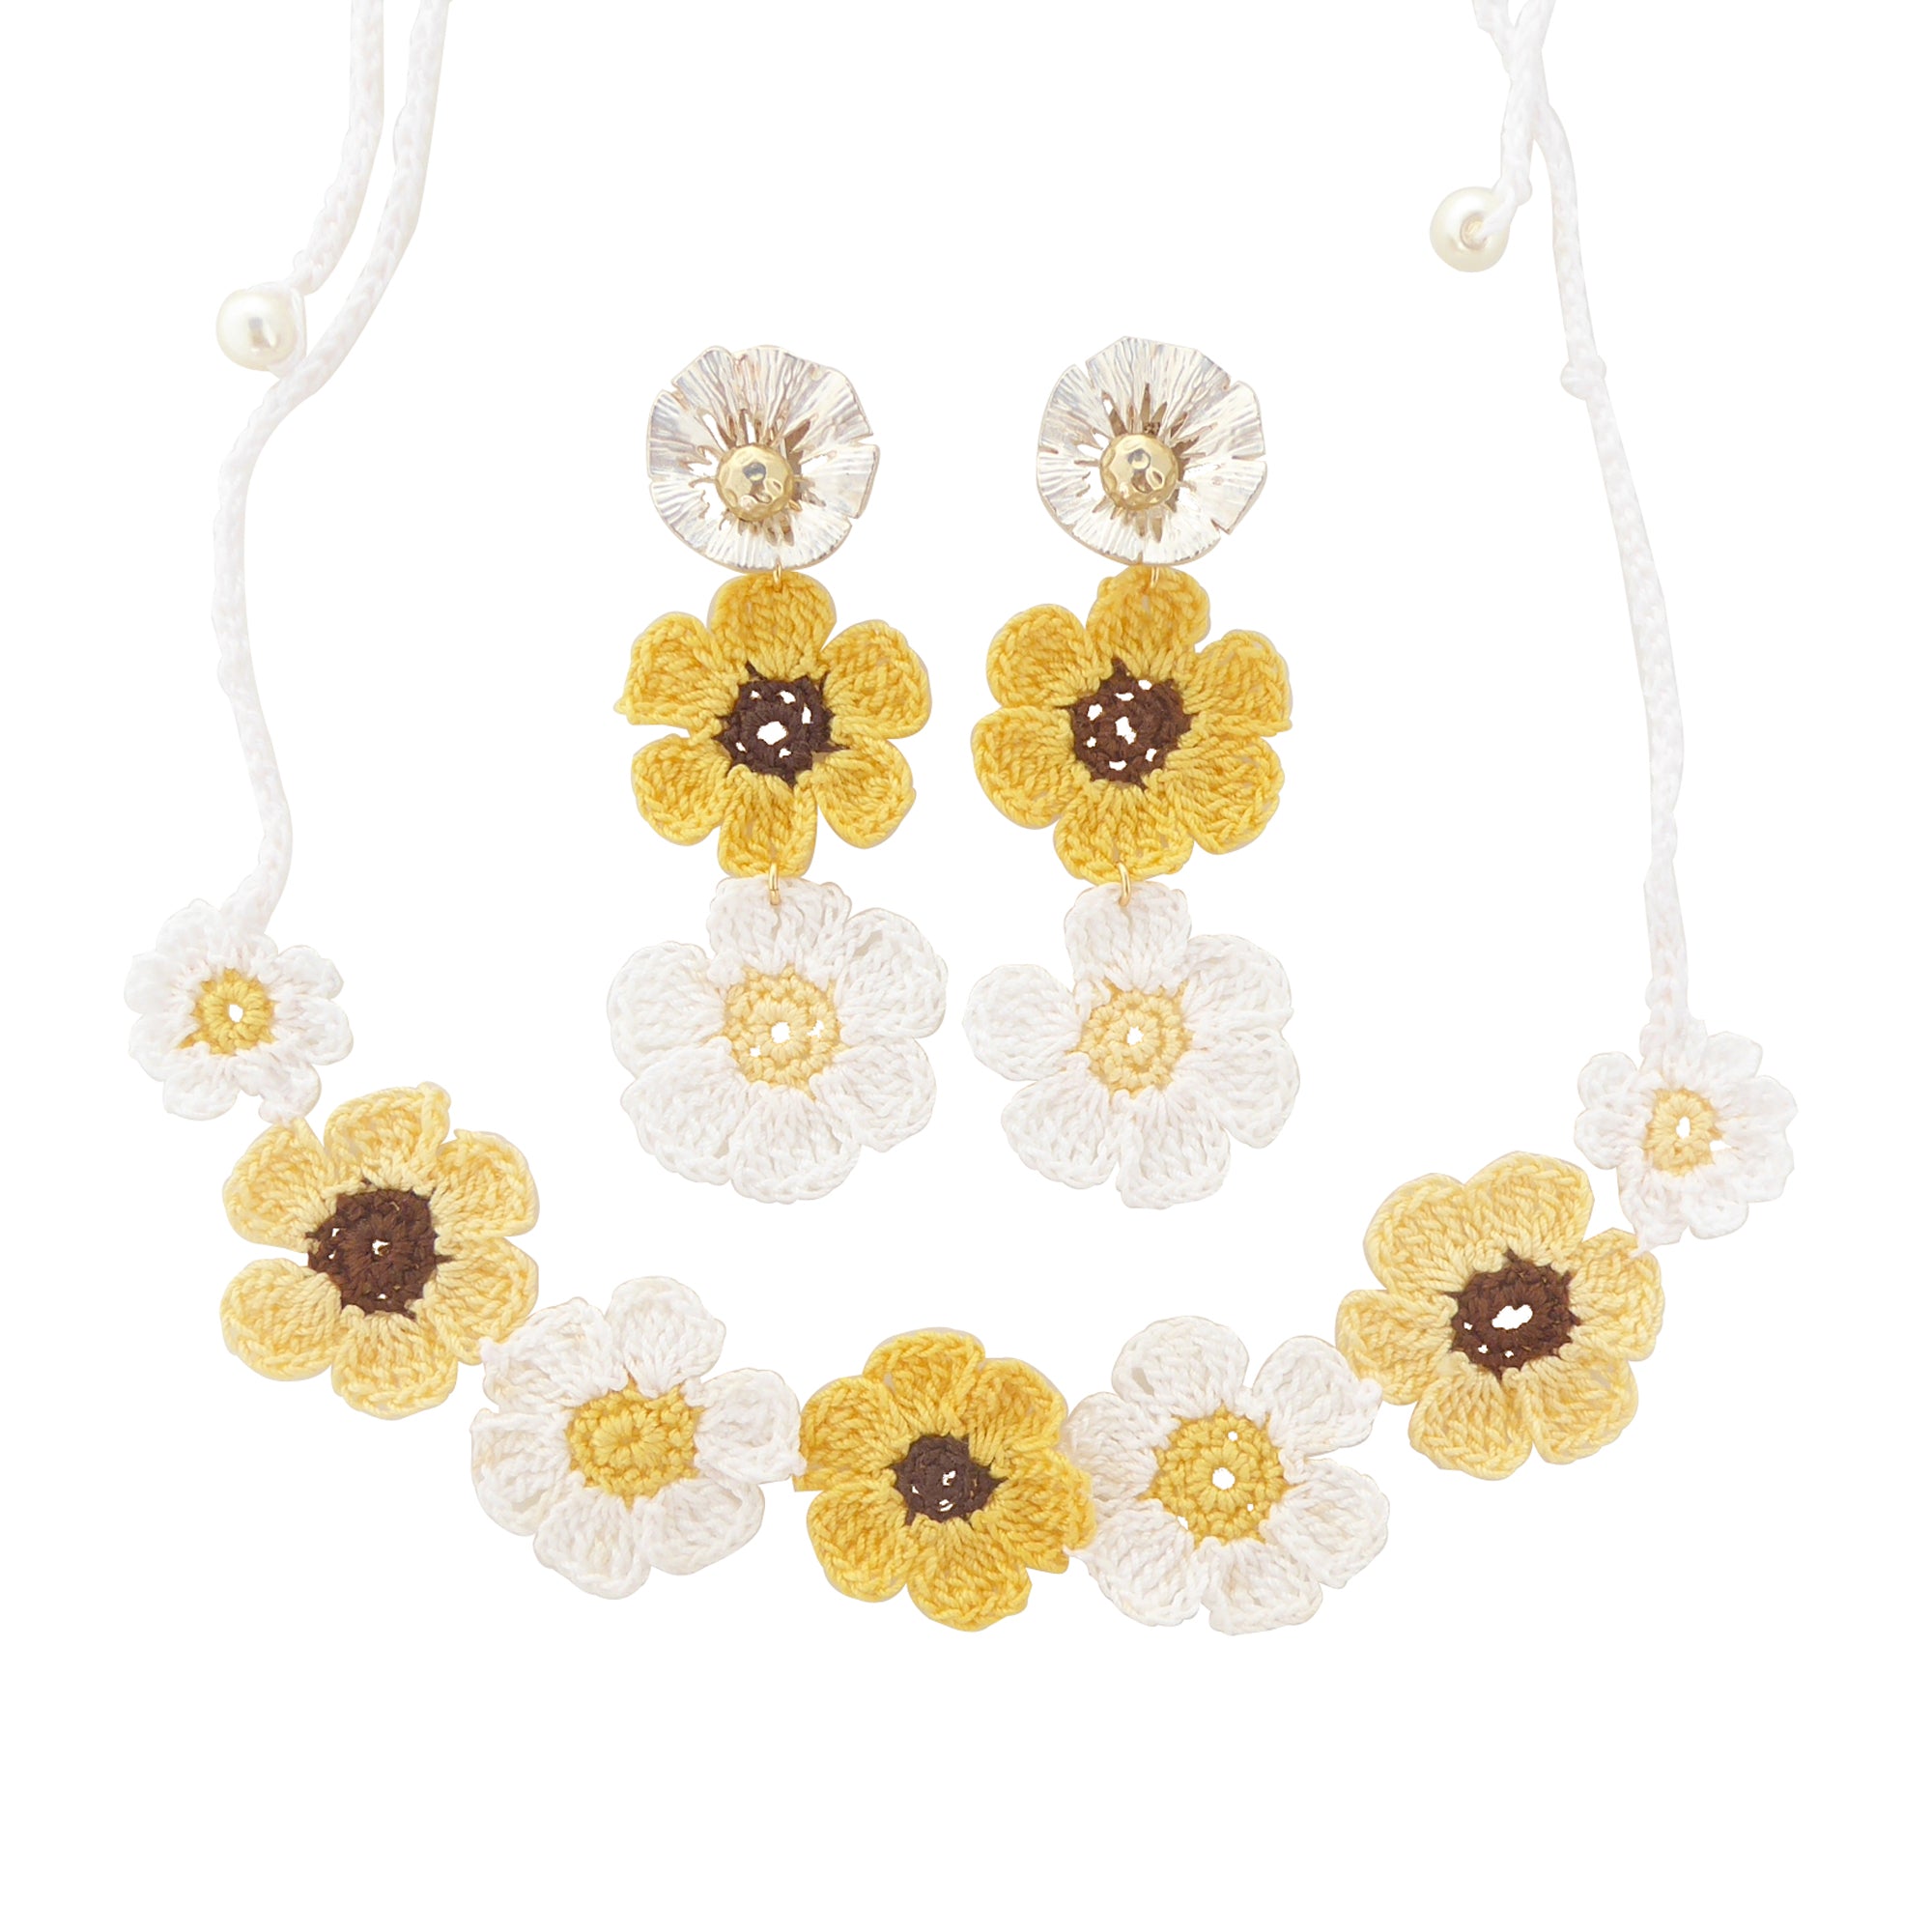 White and yellow daisy crochet jewelry set by Jenny Dayco 1